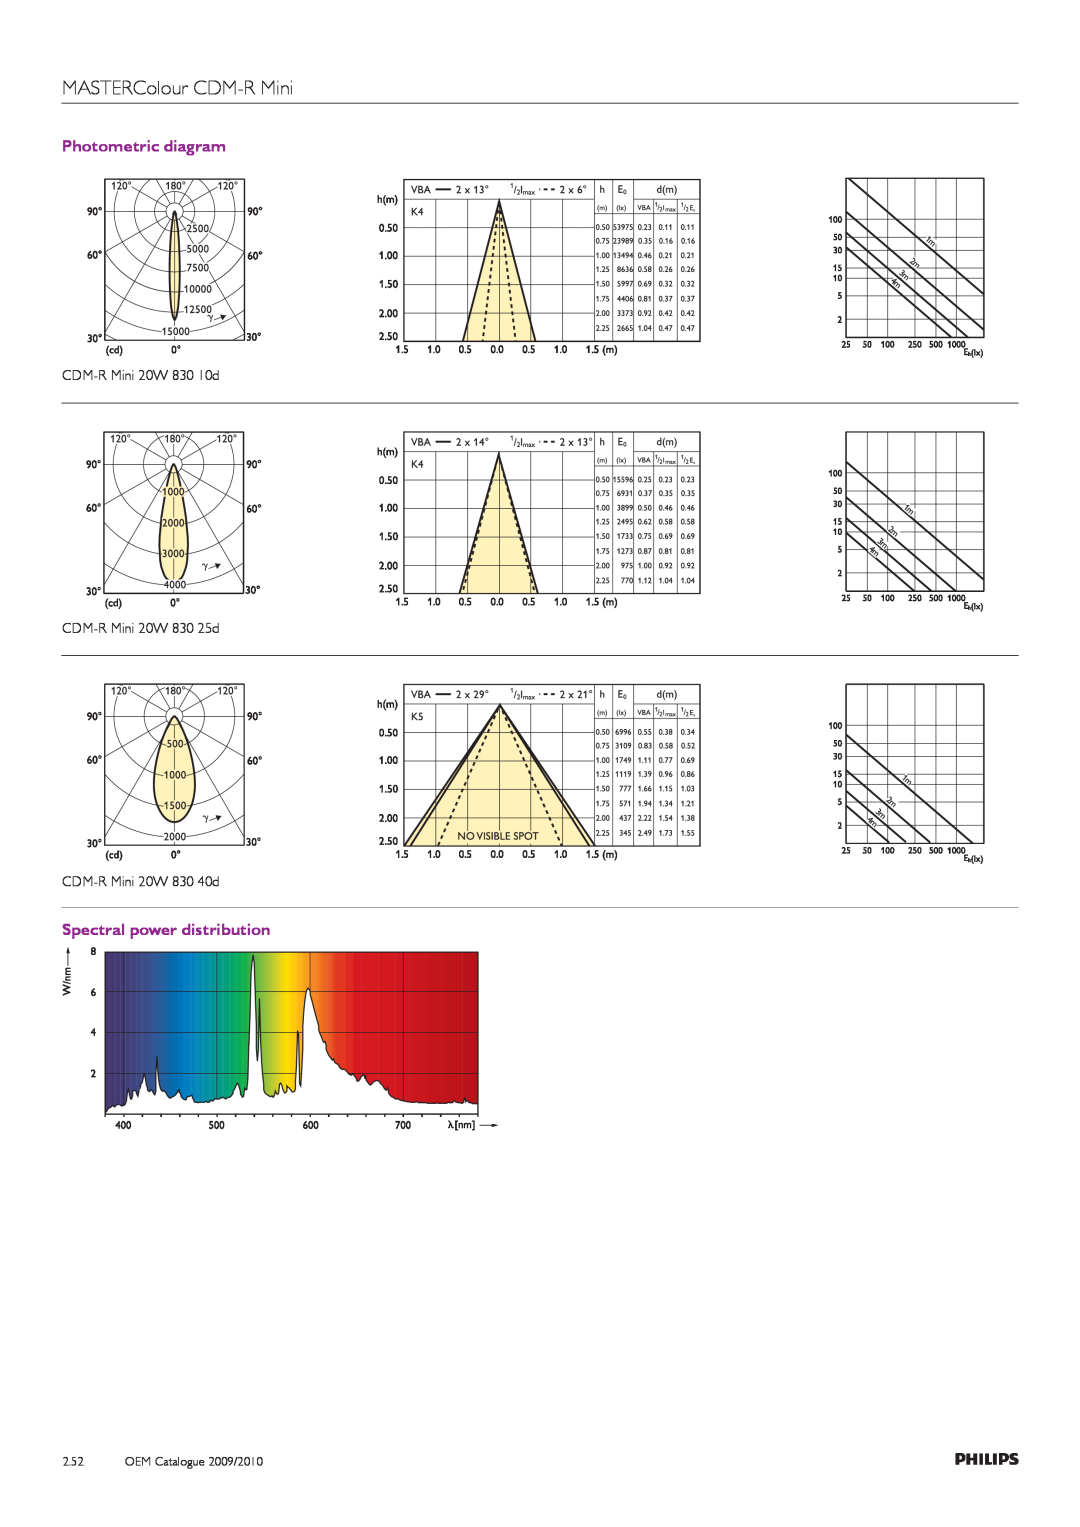 Philips Compact HID Lamp and Gear manual MASTERColour CDM-RMini, Photometric diagram, Spectral power distribution 